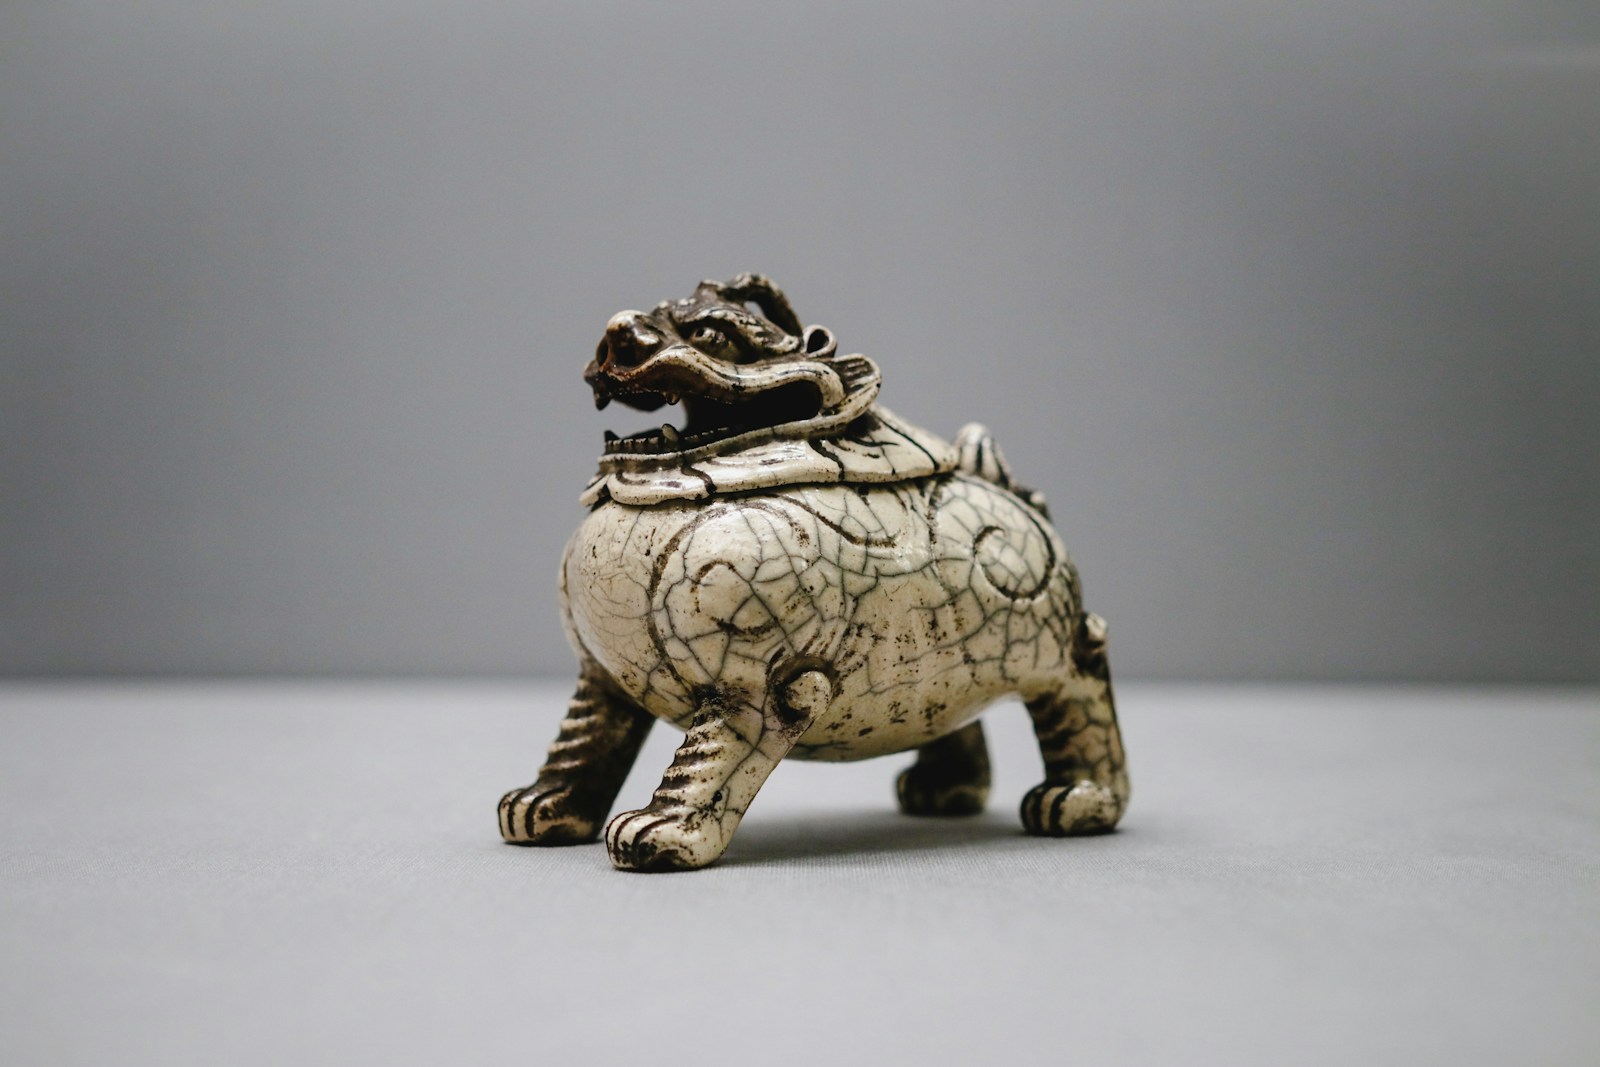 gray ceramic foo-dog figurine on white surface